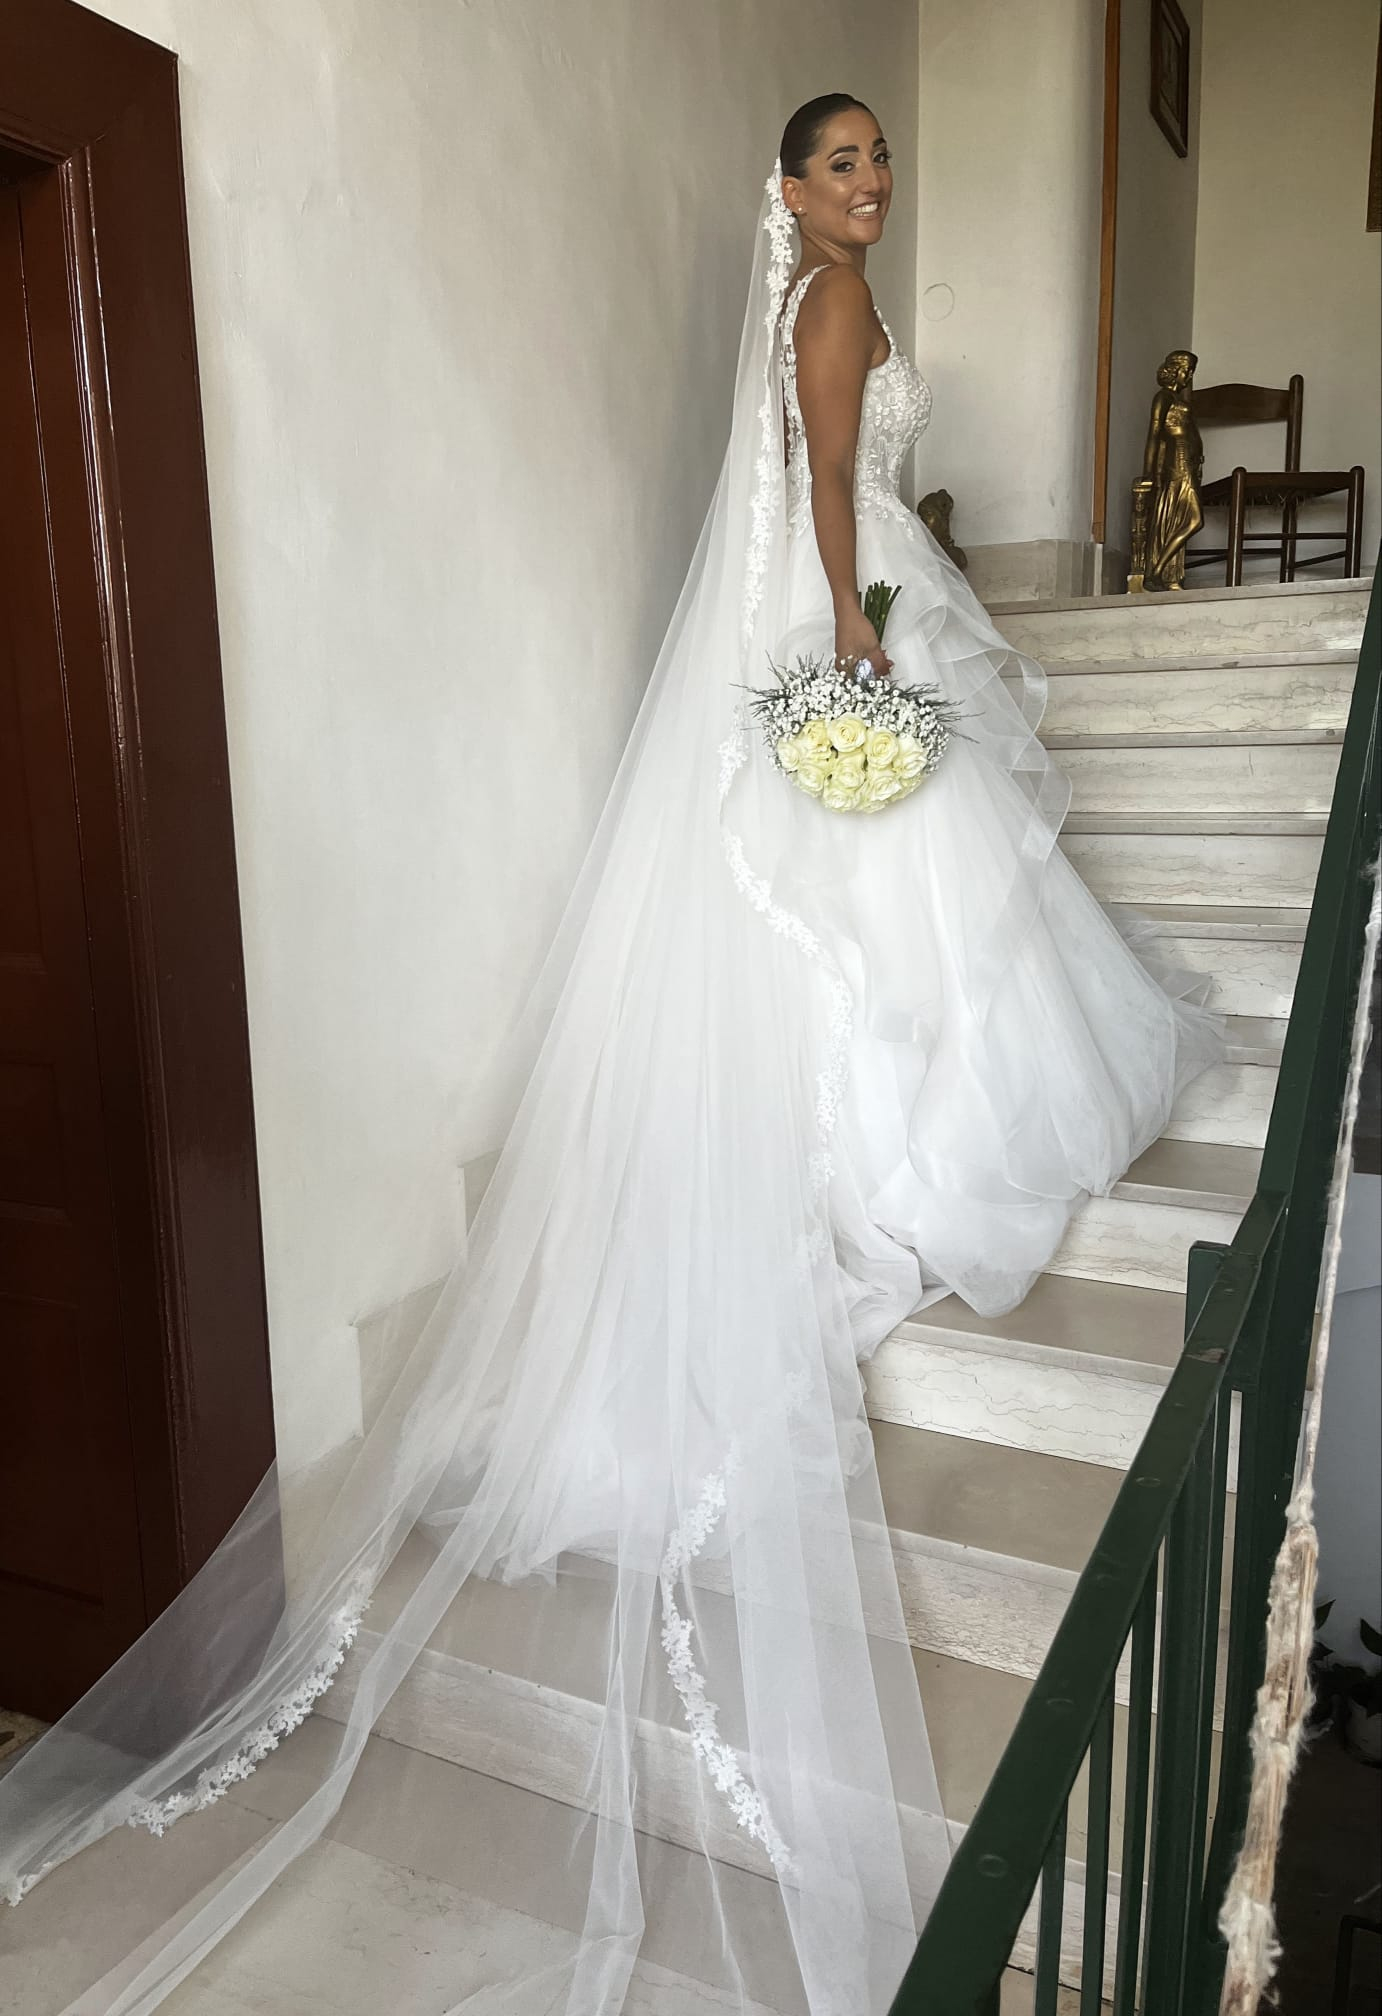 Matrimonio a Sorrento: - Vertigini HaiDresser Acconciature Sposa Make up Artist e Parrucchiere per matrimonio